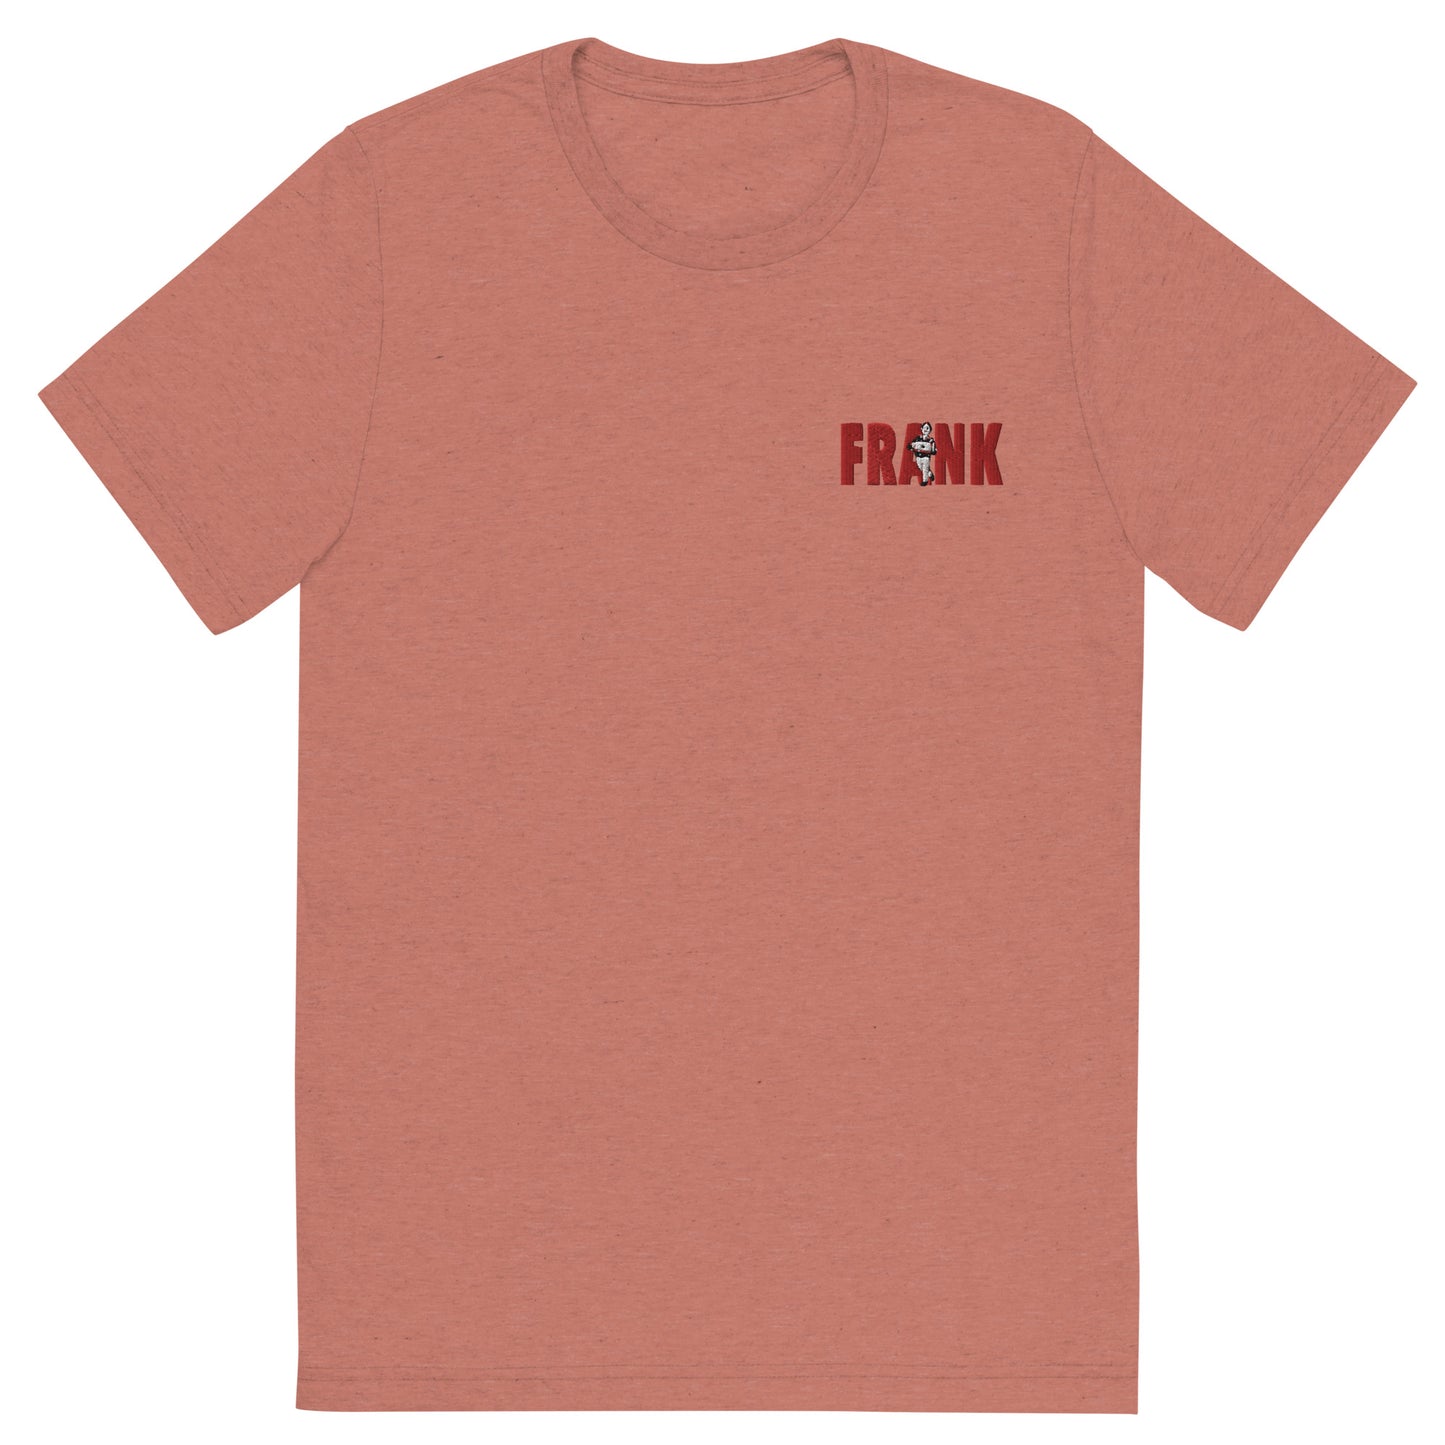 Frank's short sleeve t-shirt